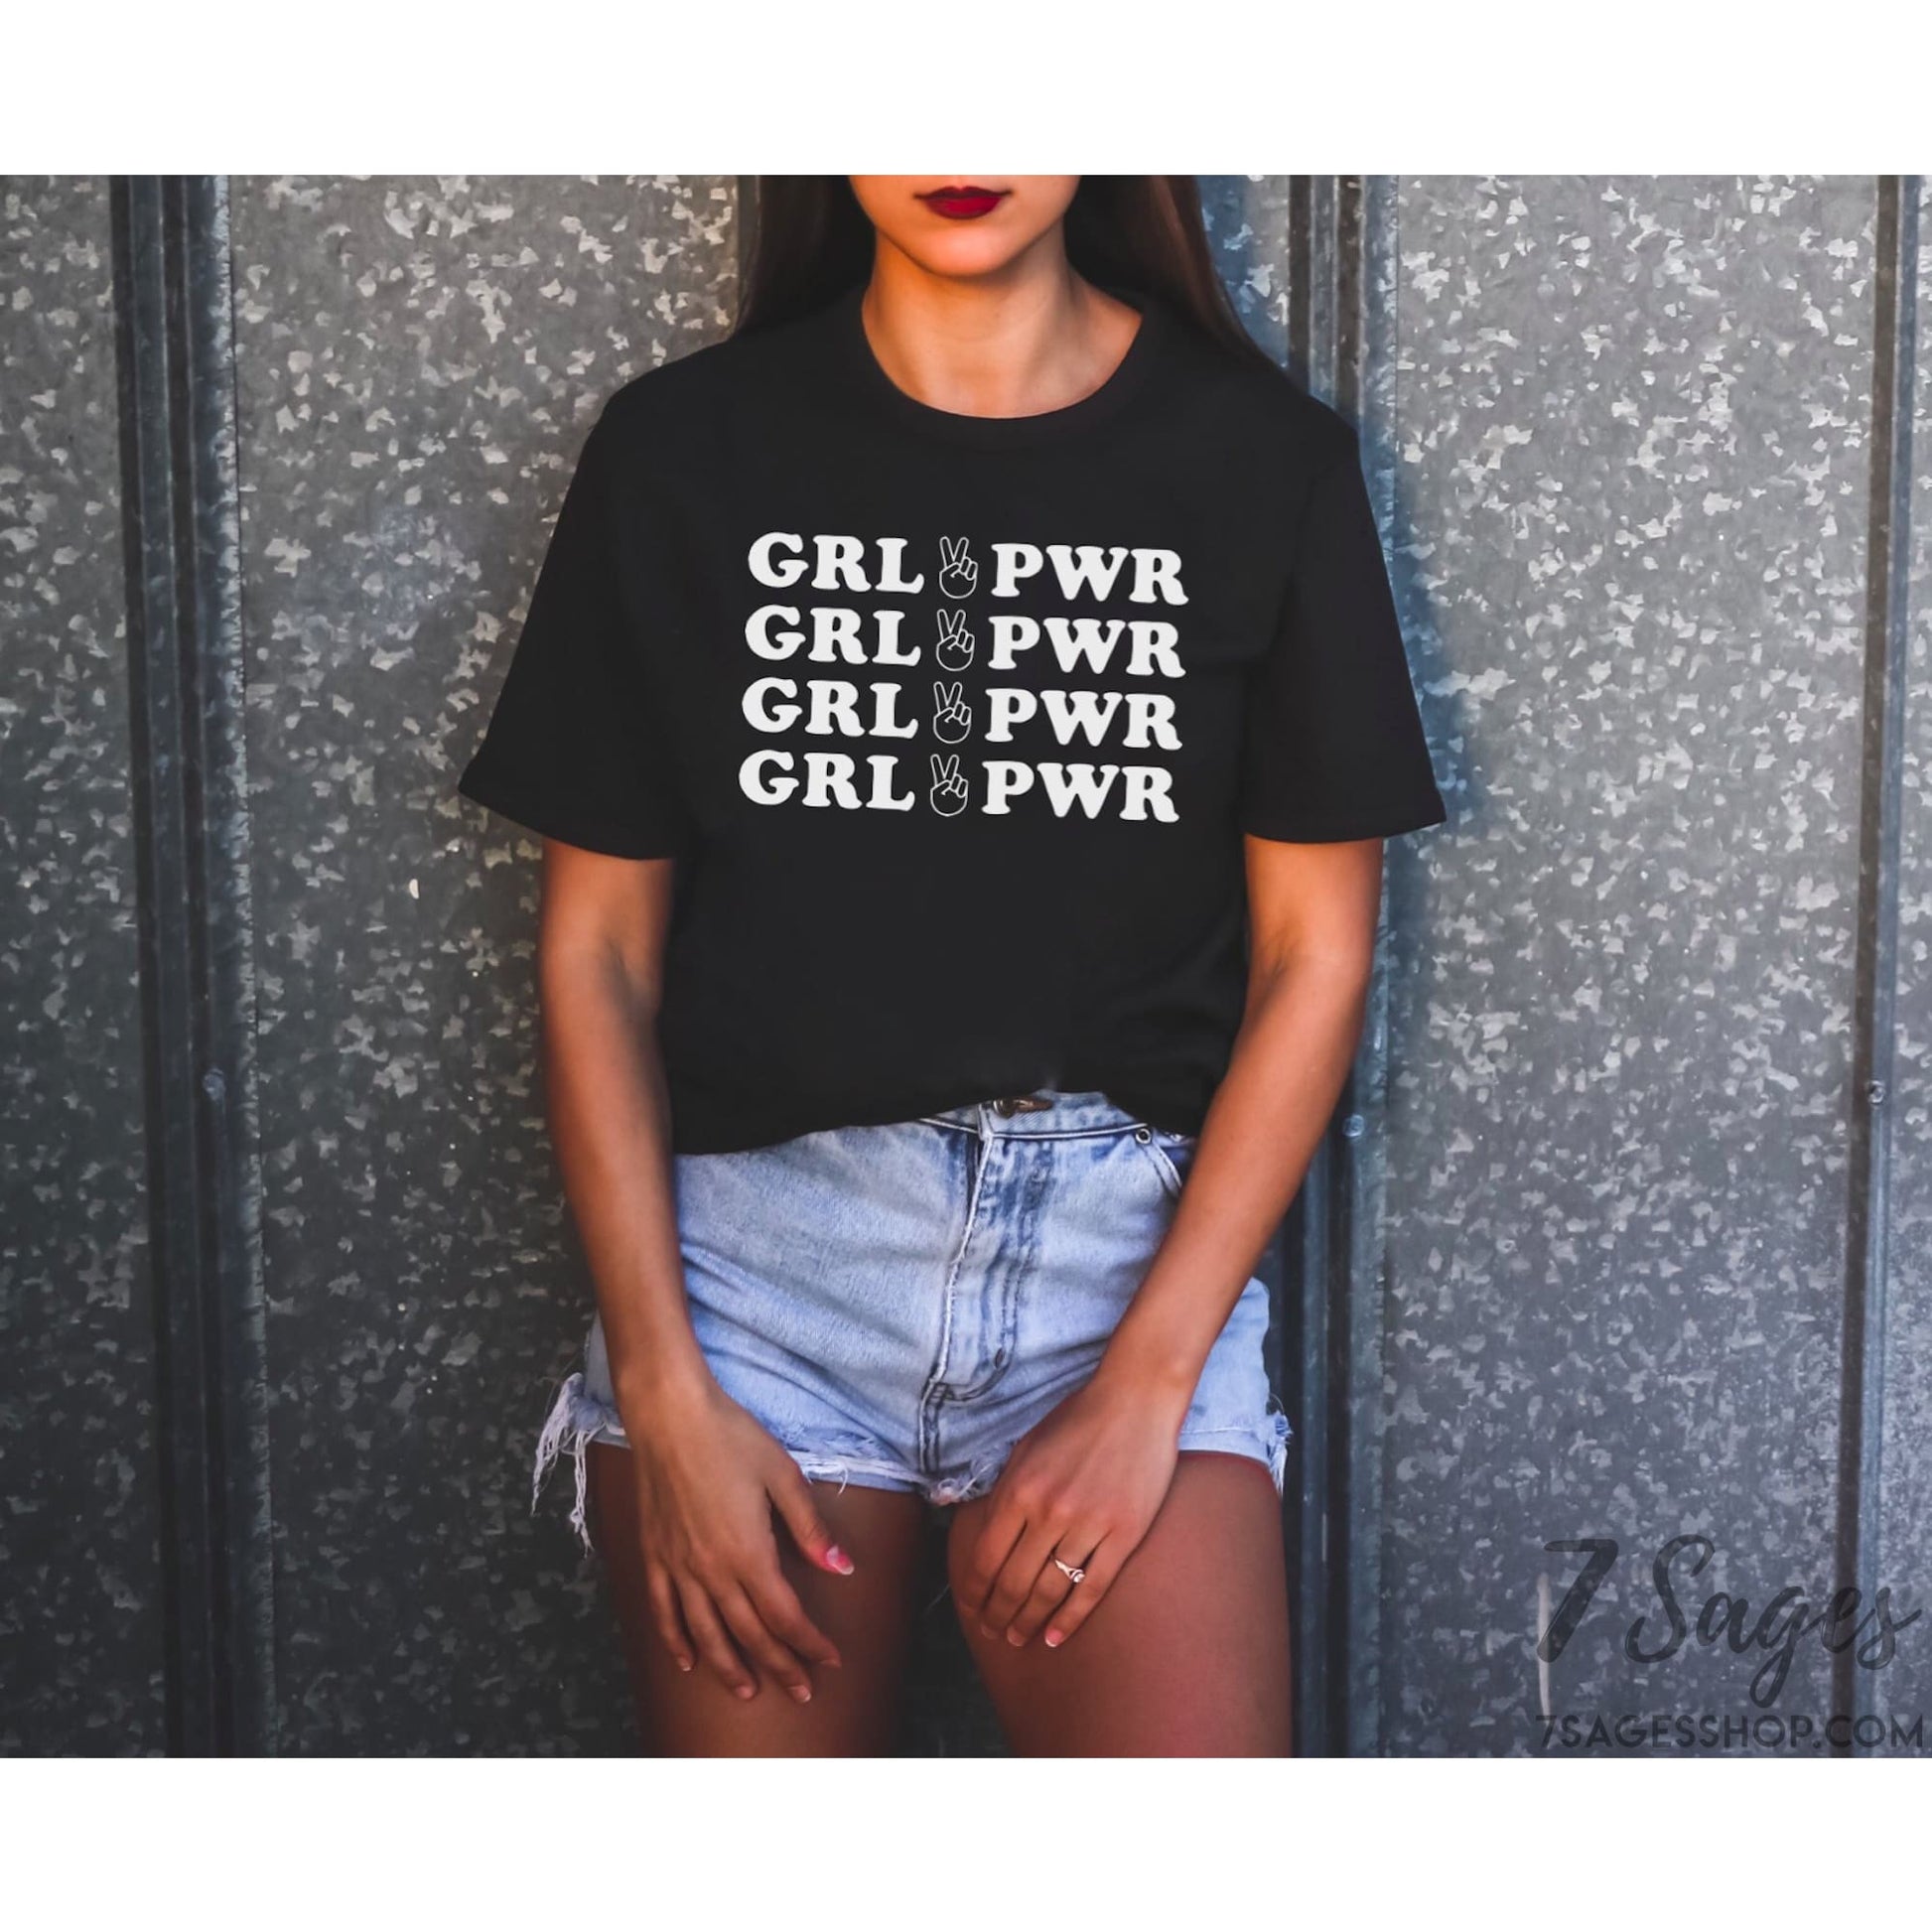 Girl Power T-Shirt